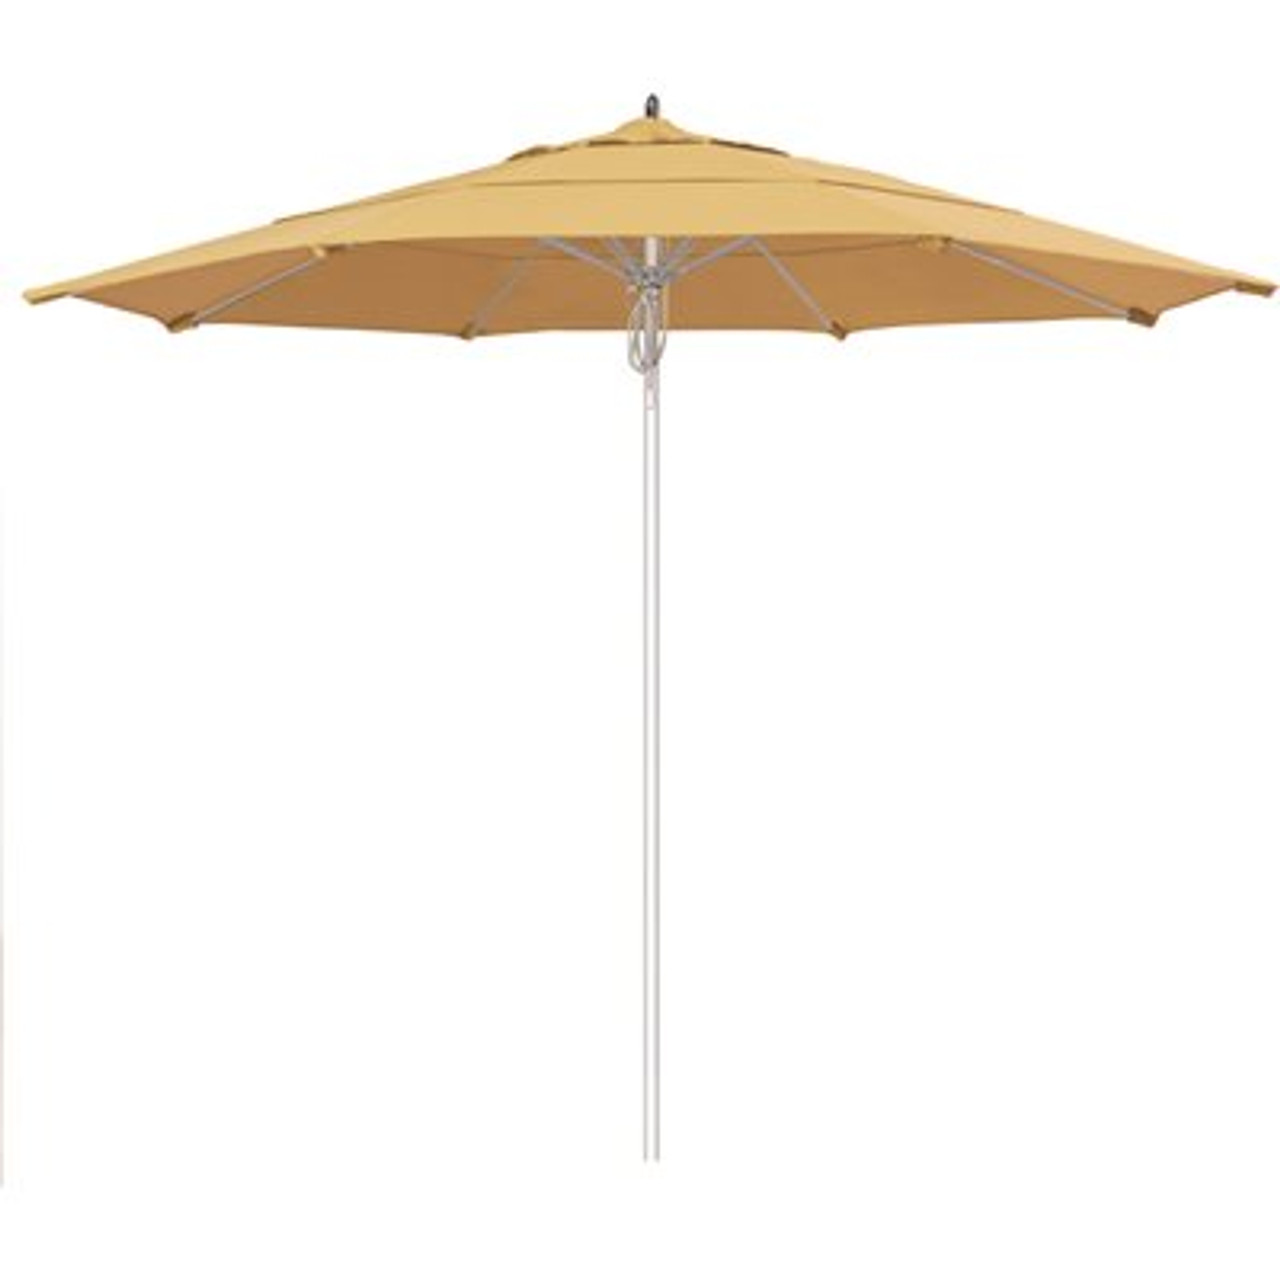 11 ft. Silver Aluminum Commercial Market Patio Umbrella Fiberglass Ribs and Pulley Lift in Wheat Sunbrella